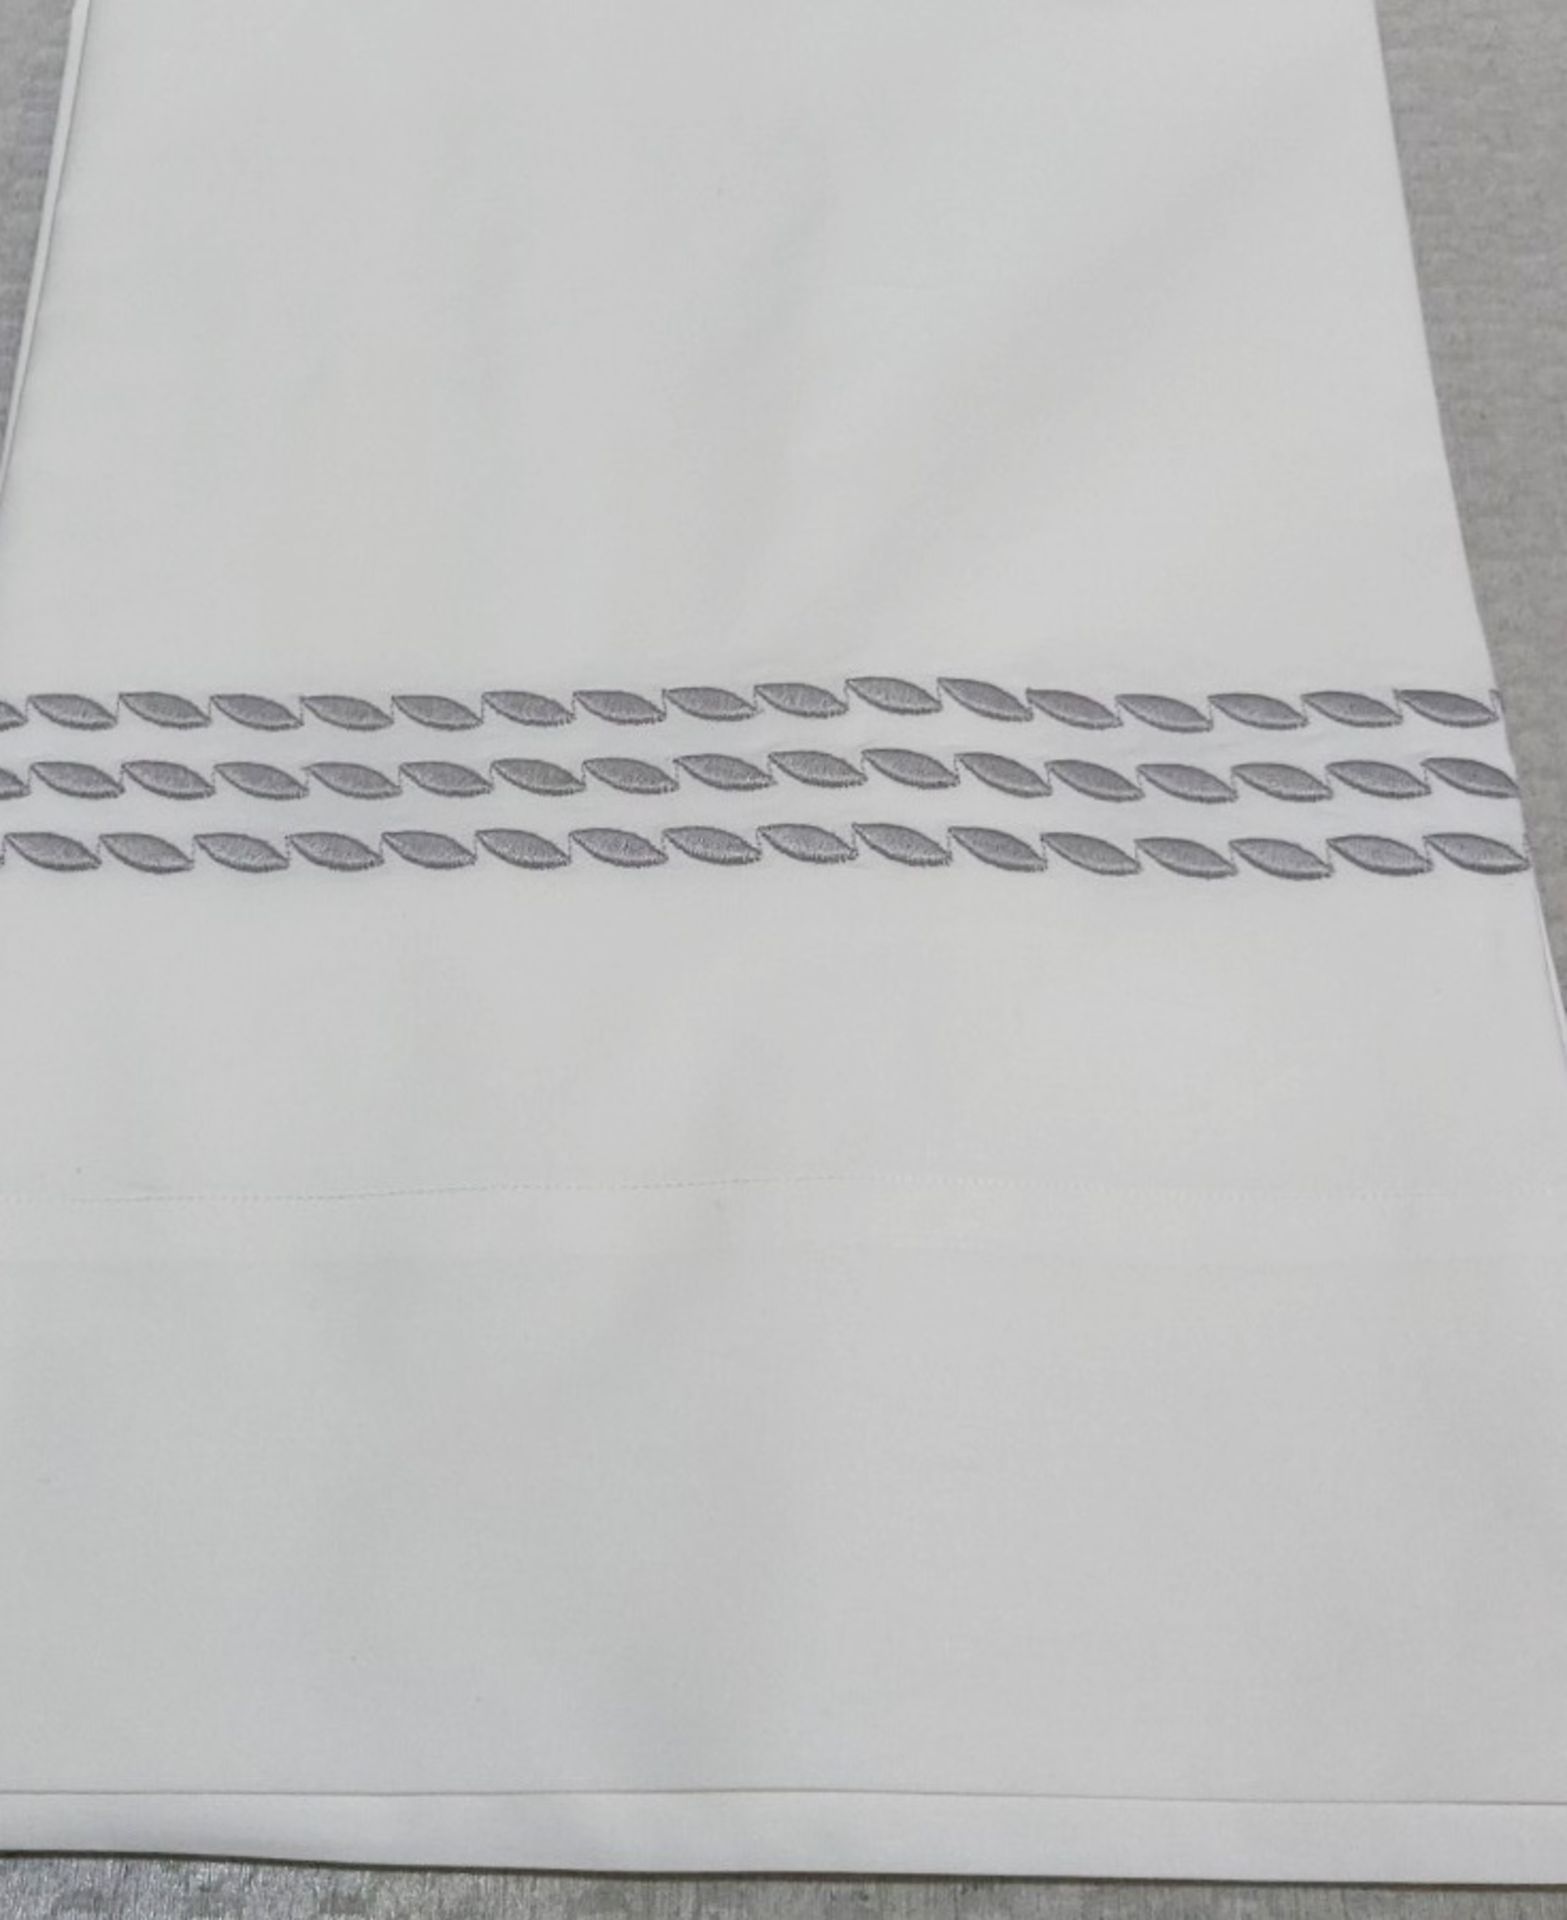 Set of 2 PRATESI Pioggia Embroidery Pillow Shaw 2 50x75cm- Original Price £570.00 - Unused Boxed - Image 5 of 6